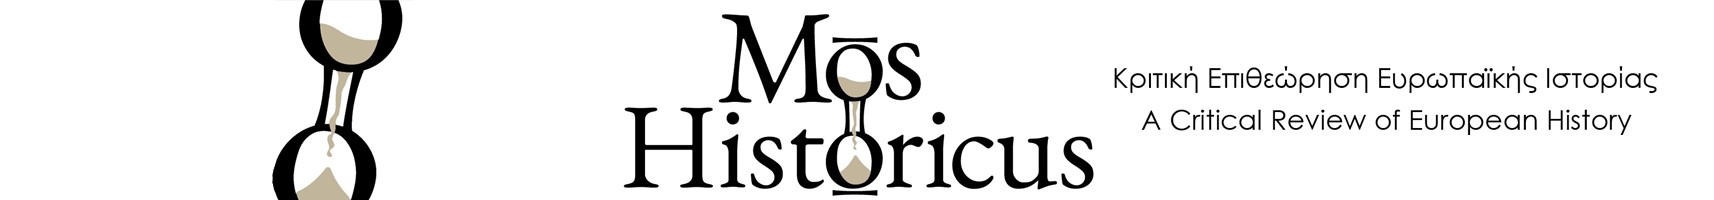 Mos Historicus: Κριτική Επιθεώρηση Ευρωπαϊκής Ιστορίας